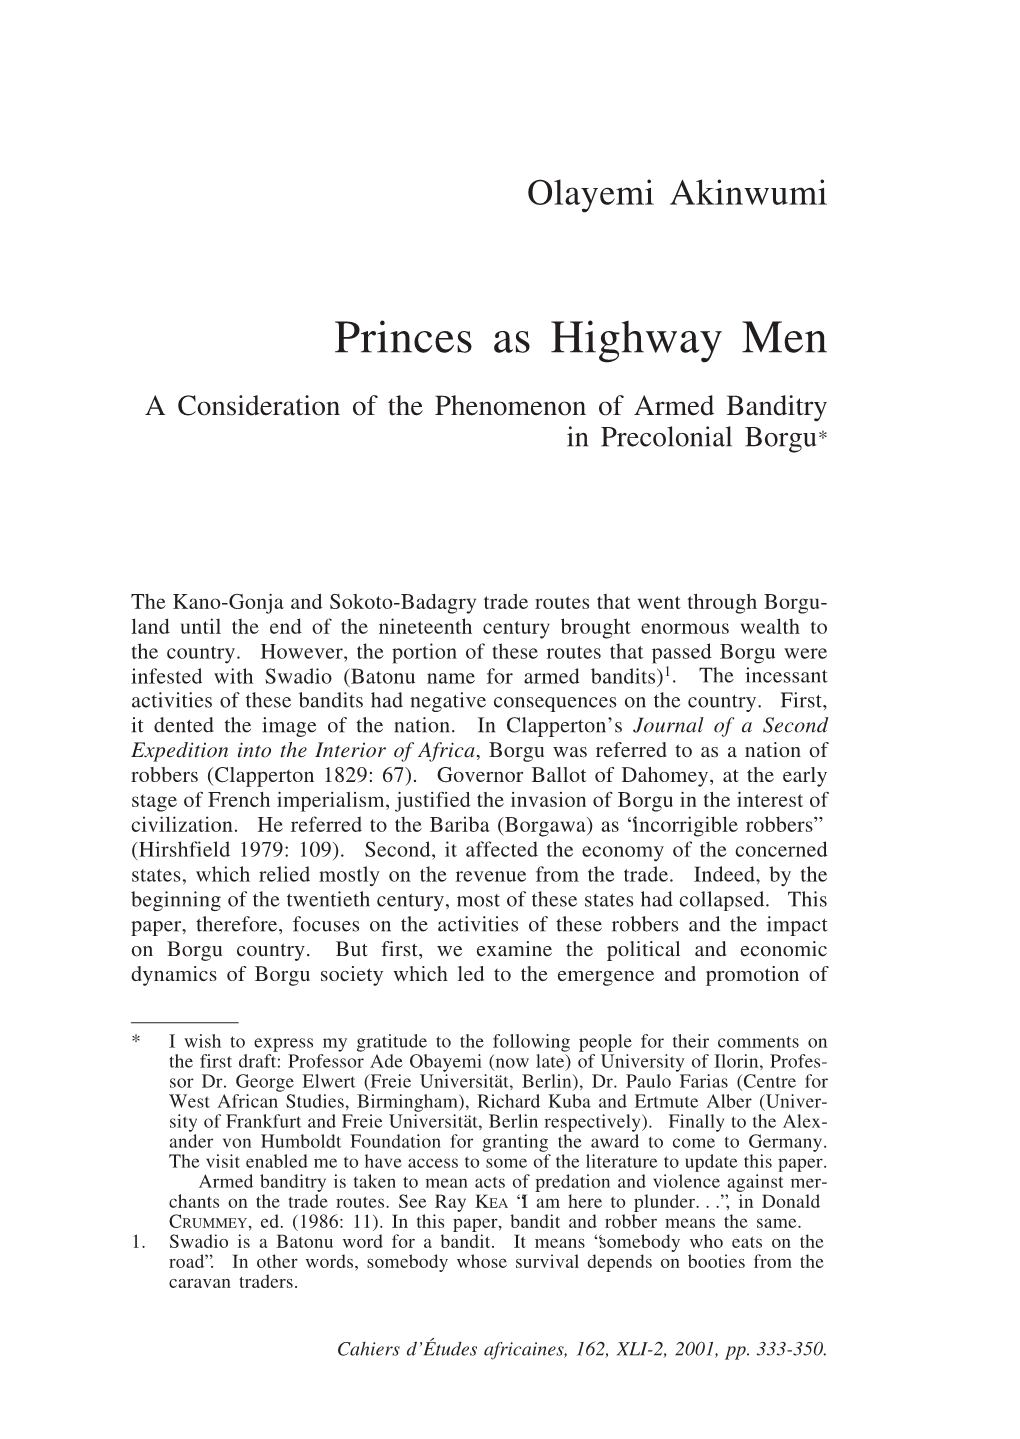 Princes As Highway Men